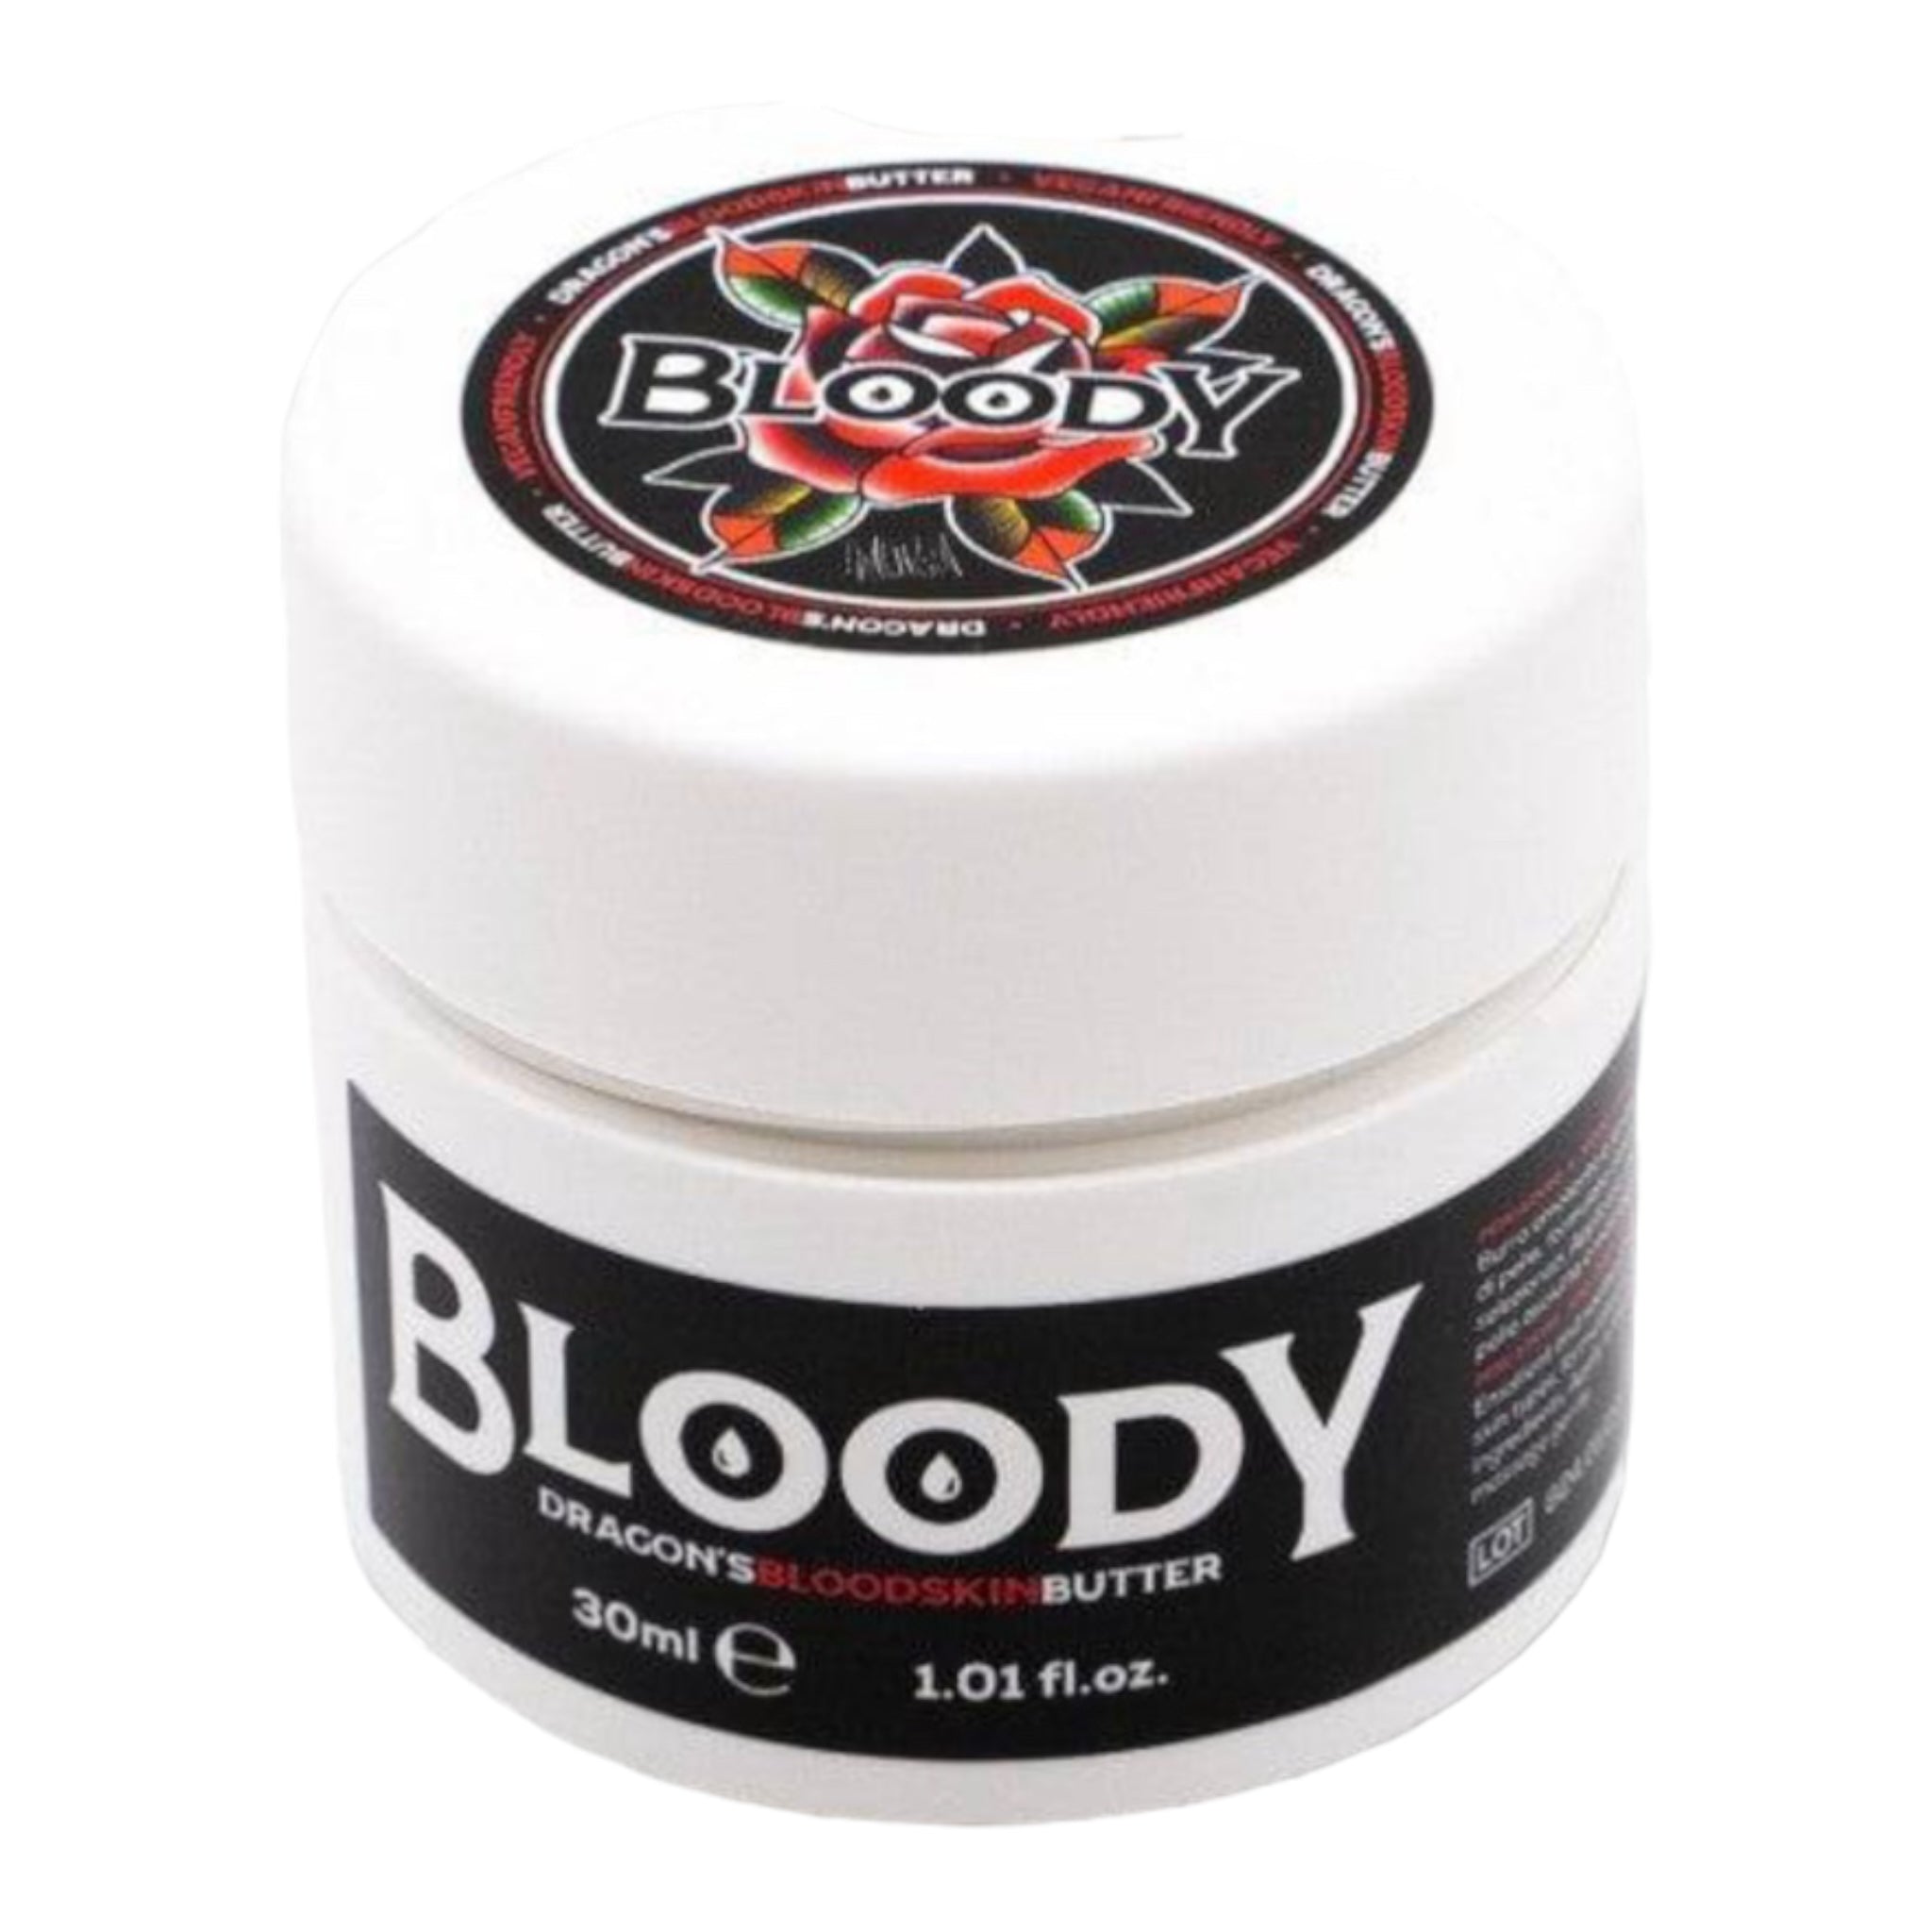 Bloody Dragon's Blood Butter - Vegan - 30ml